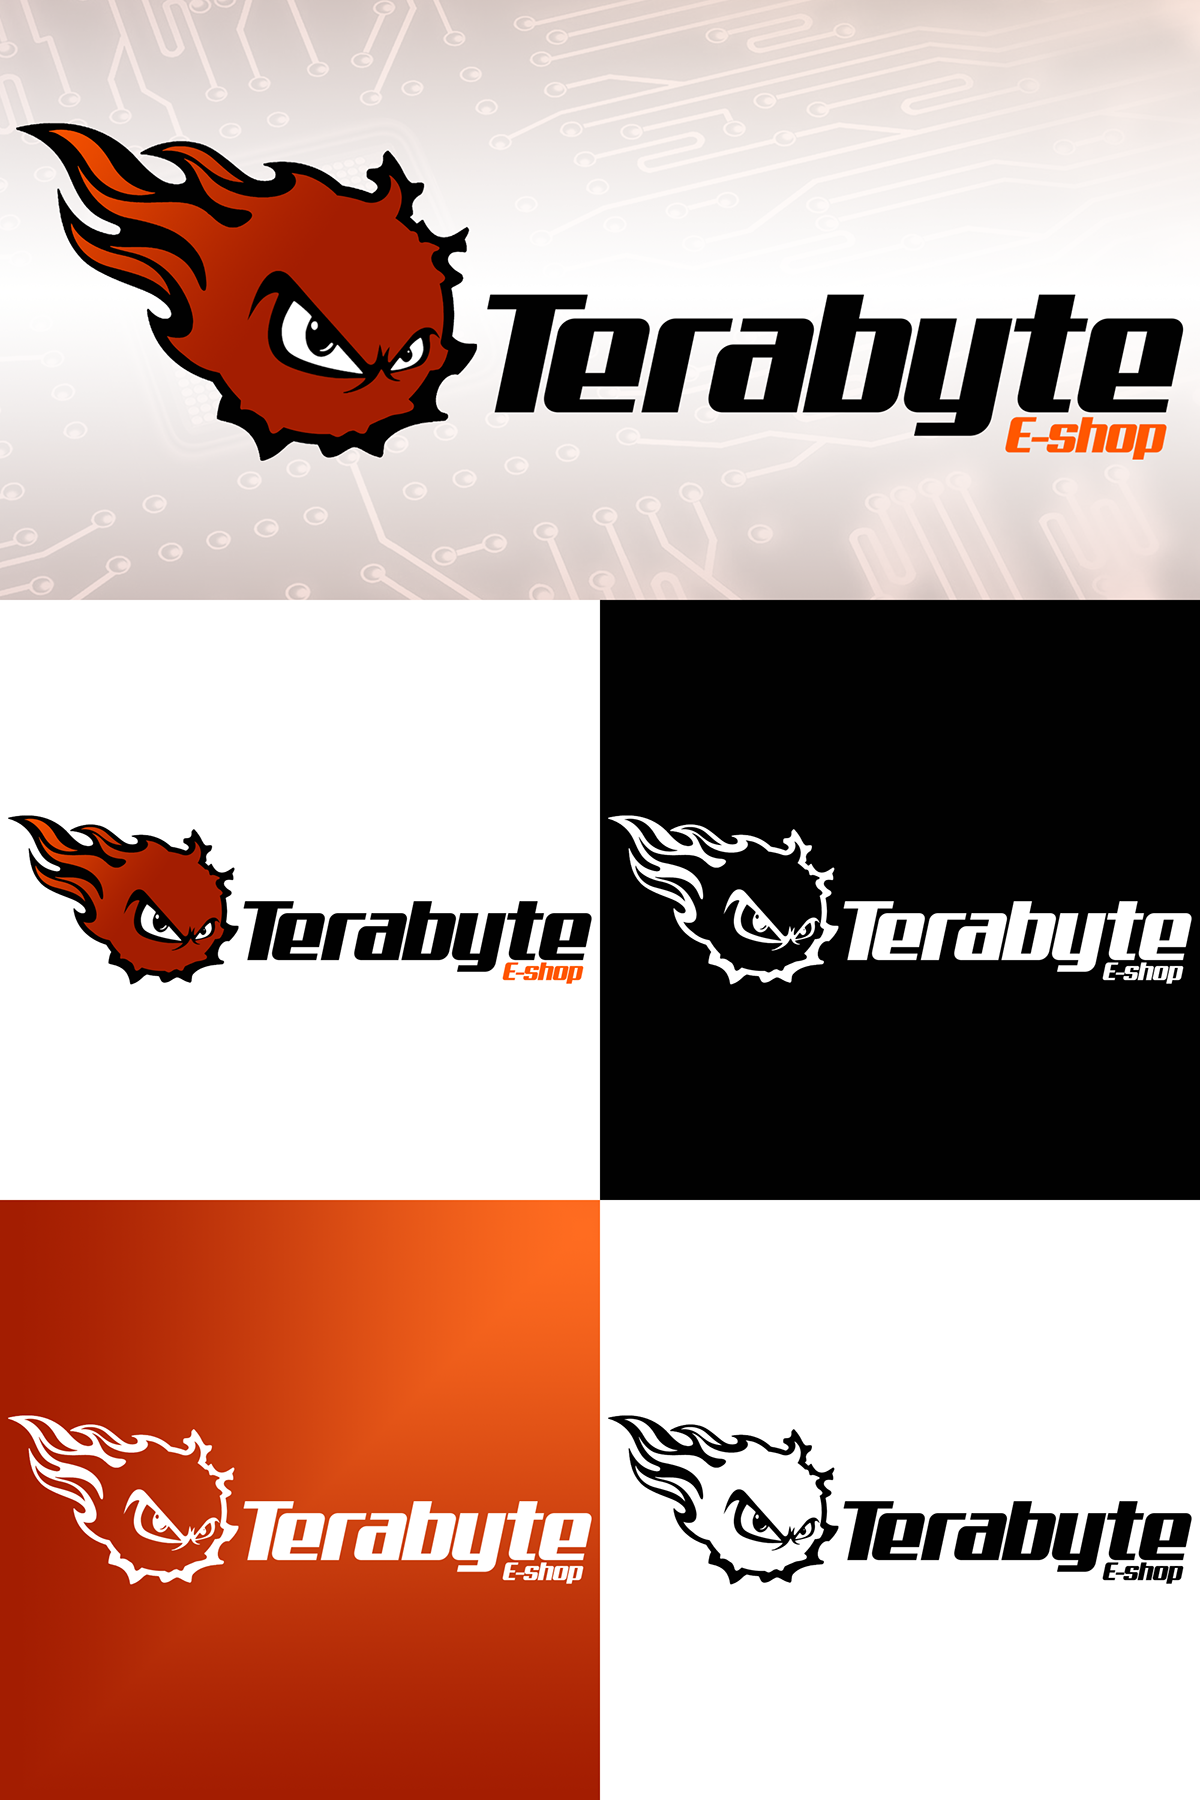 Rebrand Terabyte E-Shop concepts